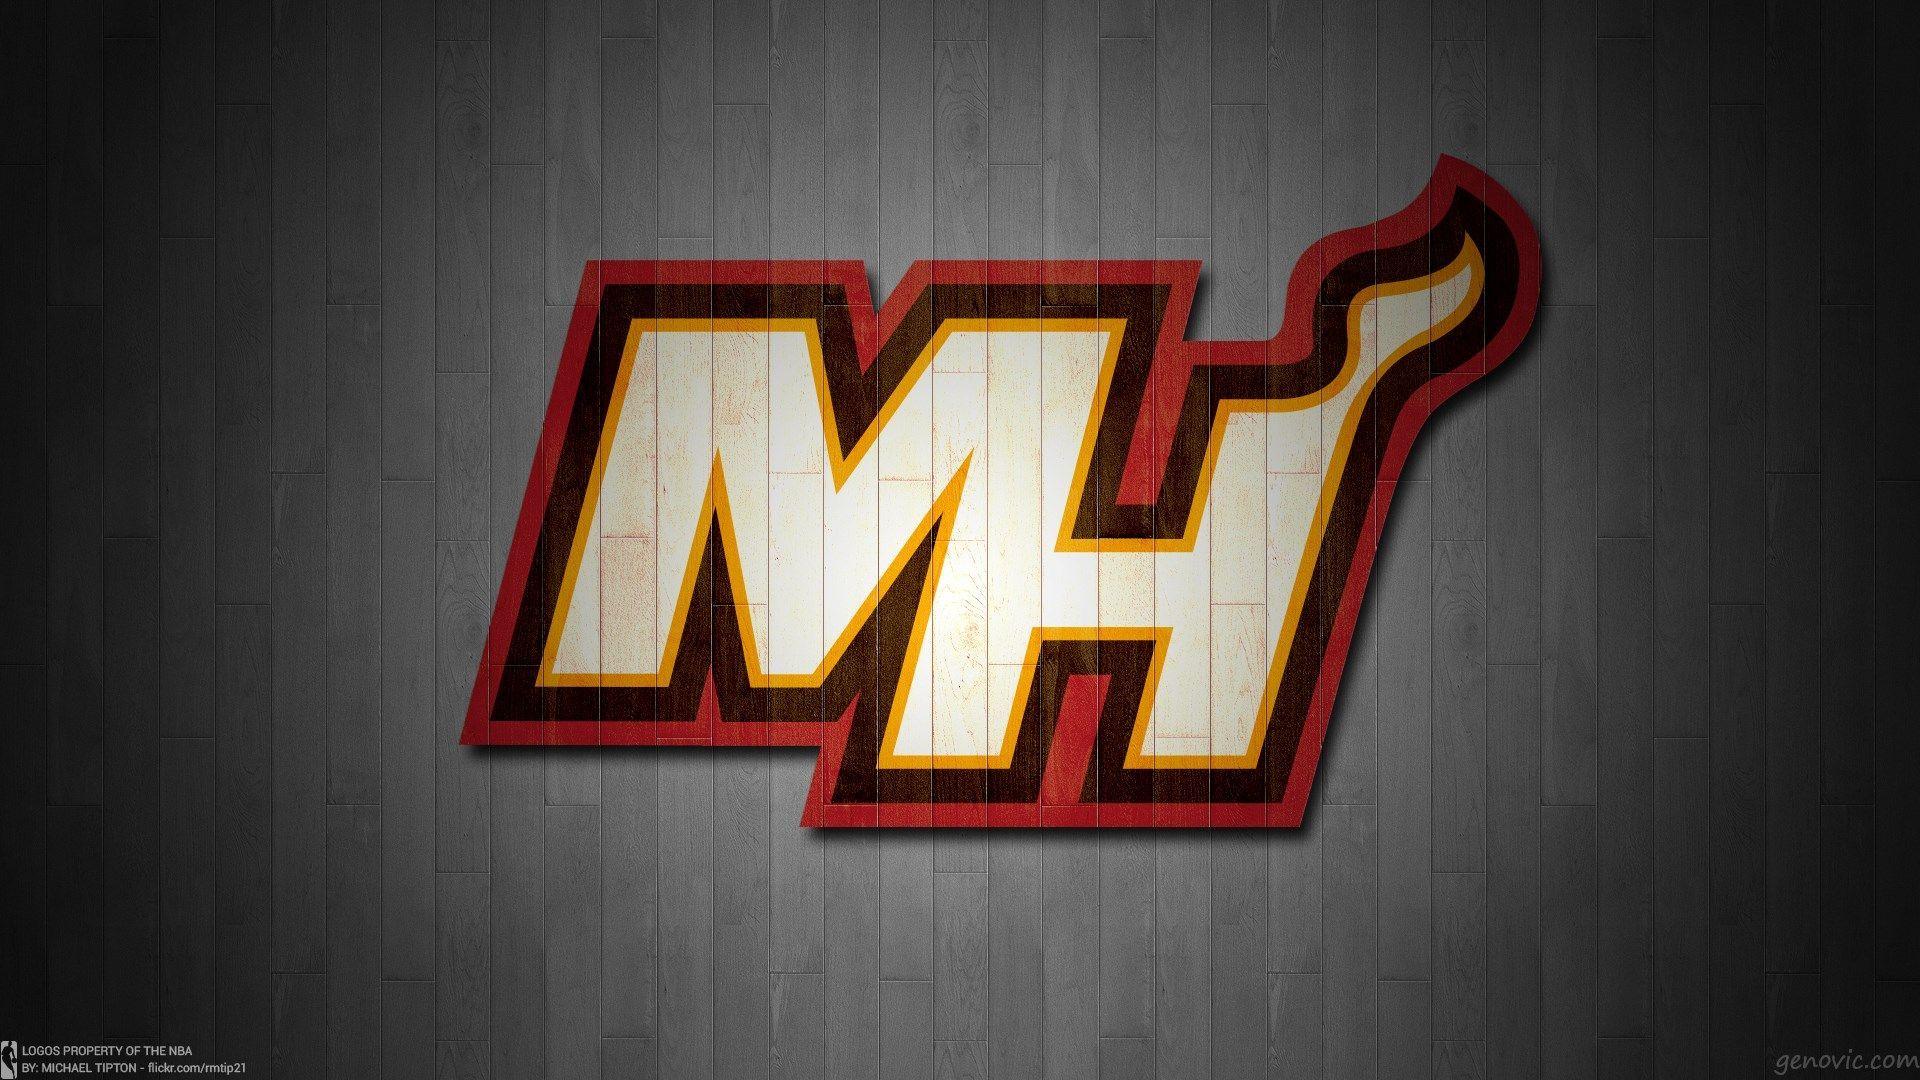 Miami Heat Logo HD Wallpaper for iPhone, Laptop, iPad, Mobile